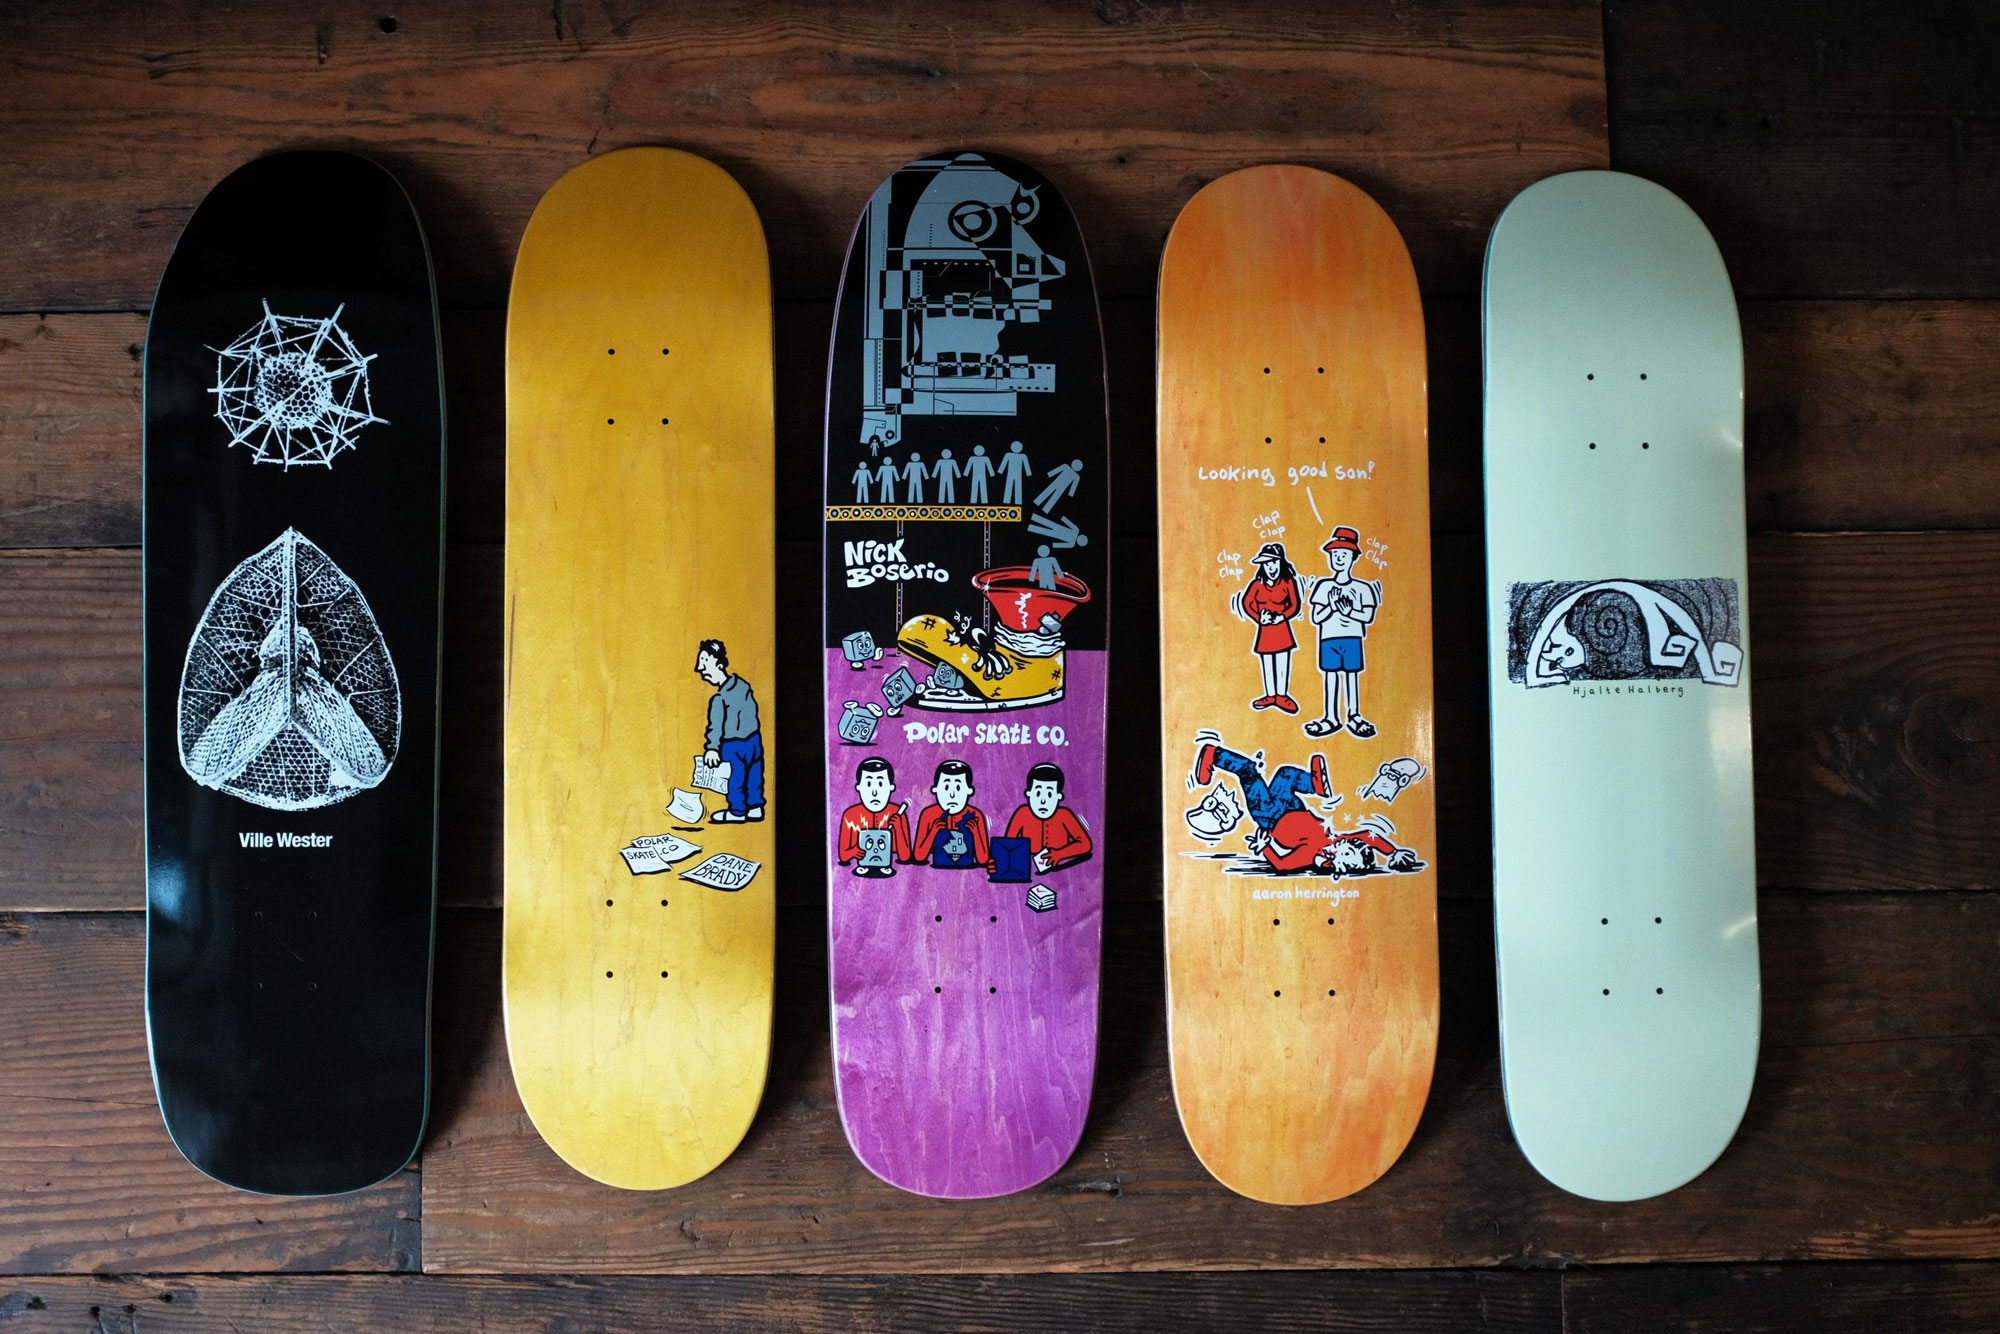 Polar Skate Co. New boards & Jamie Platt Pro debut : KUKUNOCHI SKATE DIST.